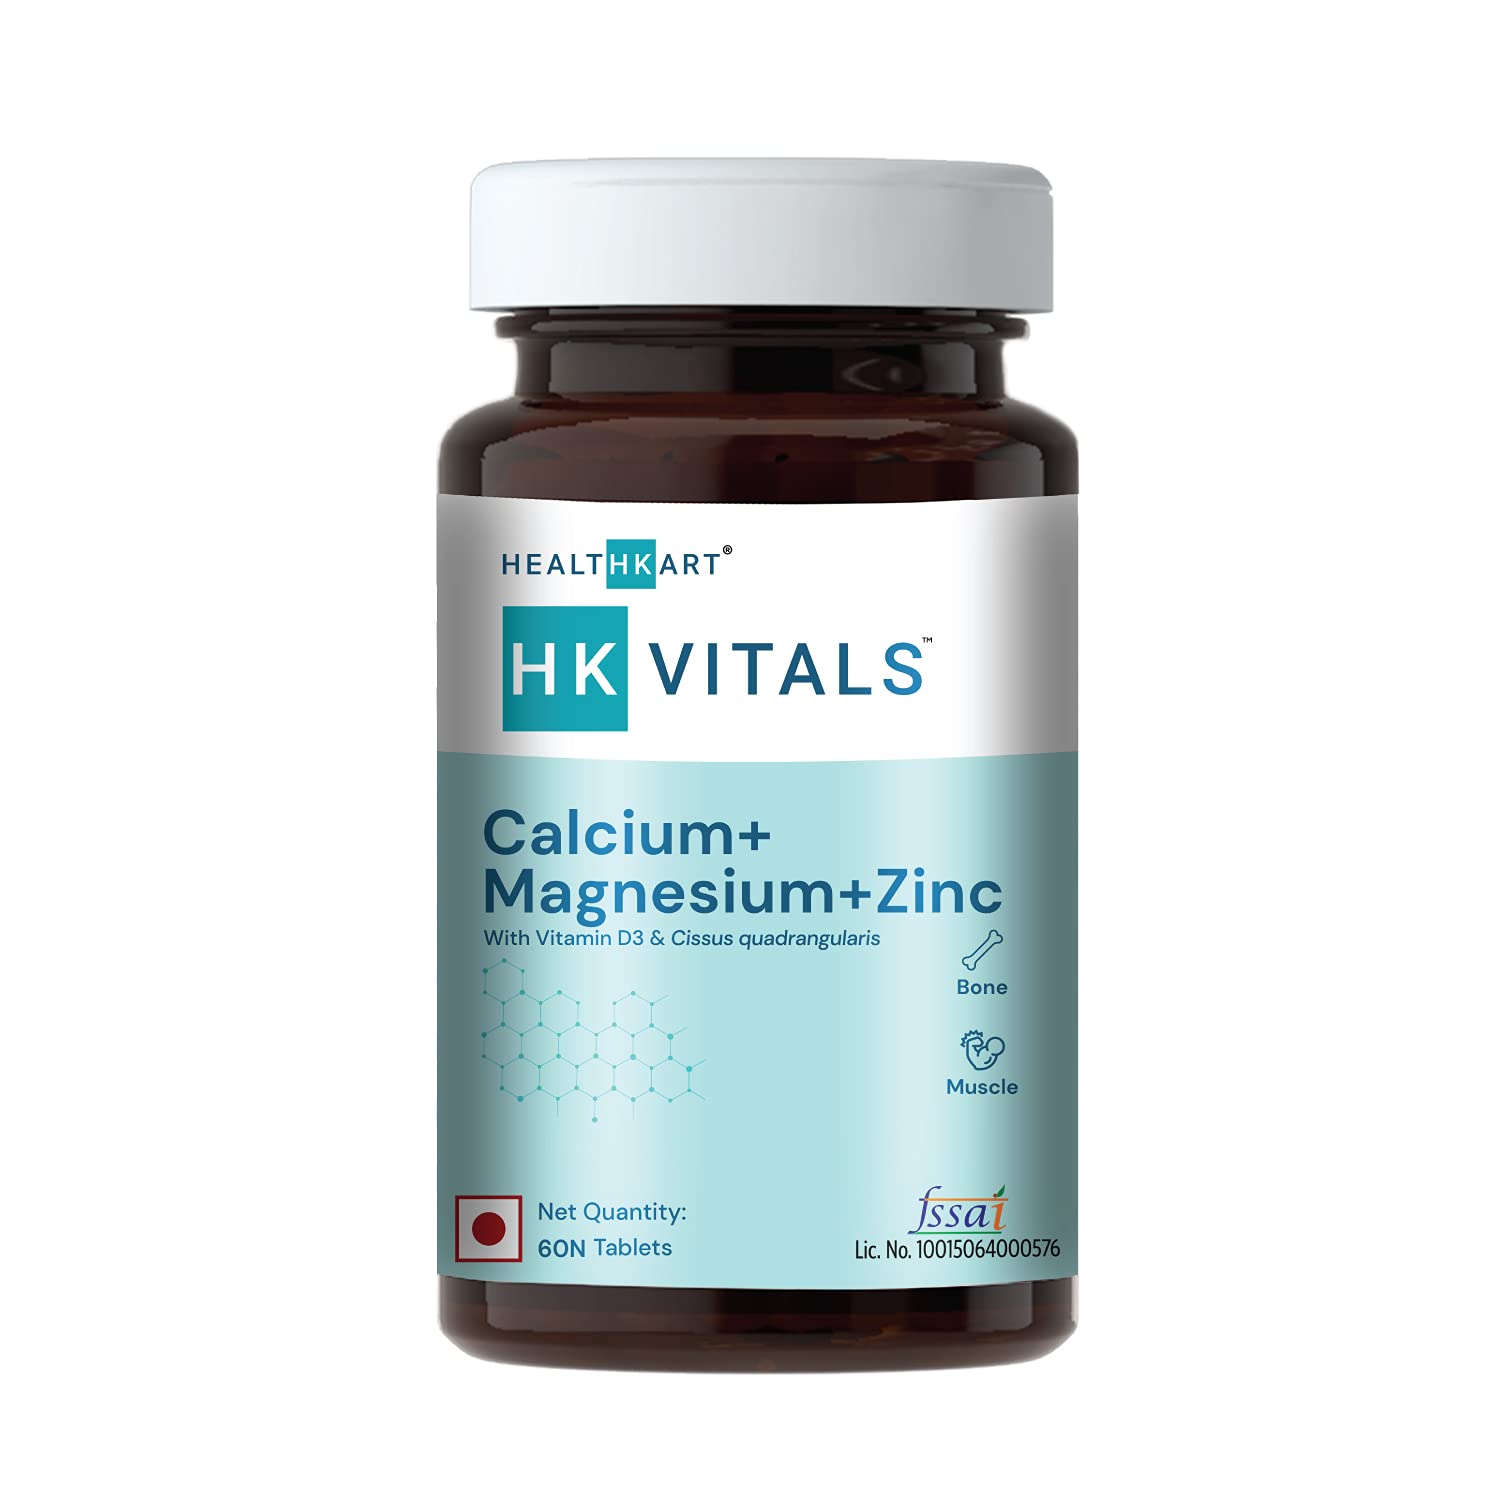 HK Vitals Calcium Magnesium Zinc Tablets Image